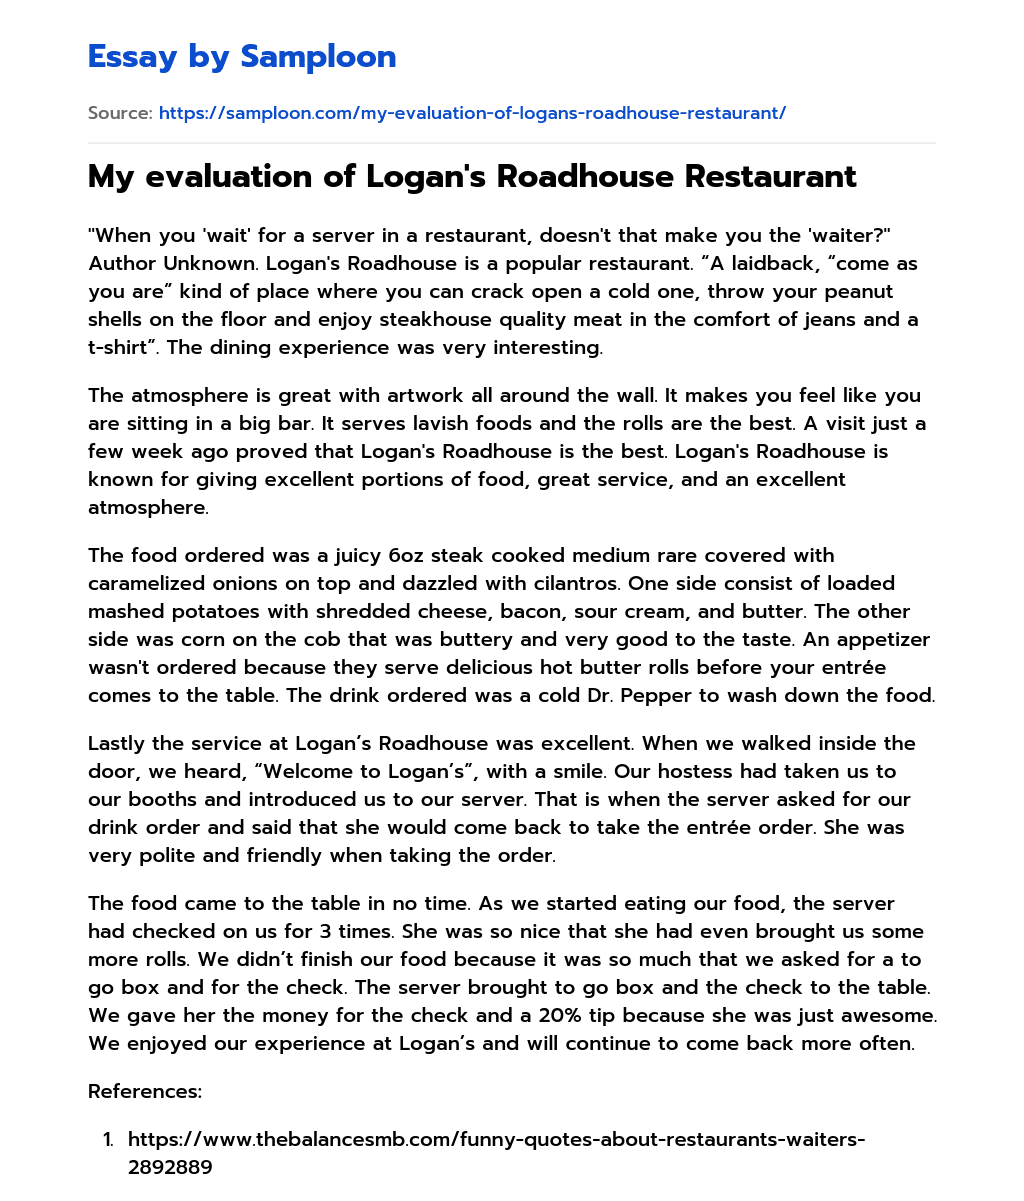 My evaluation of Logan’s Roadhouse Restaurant essay